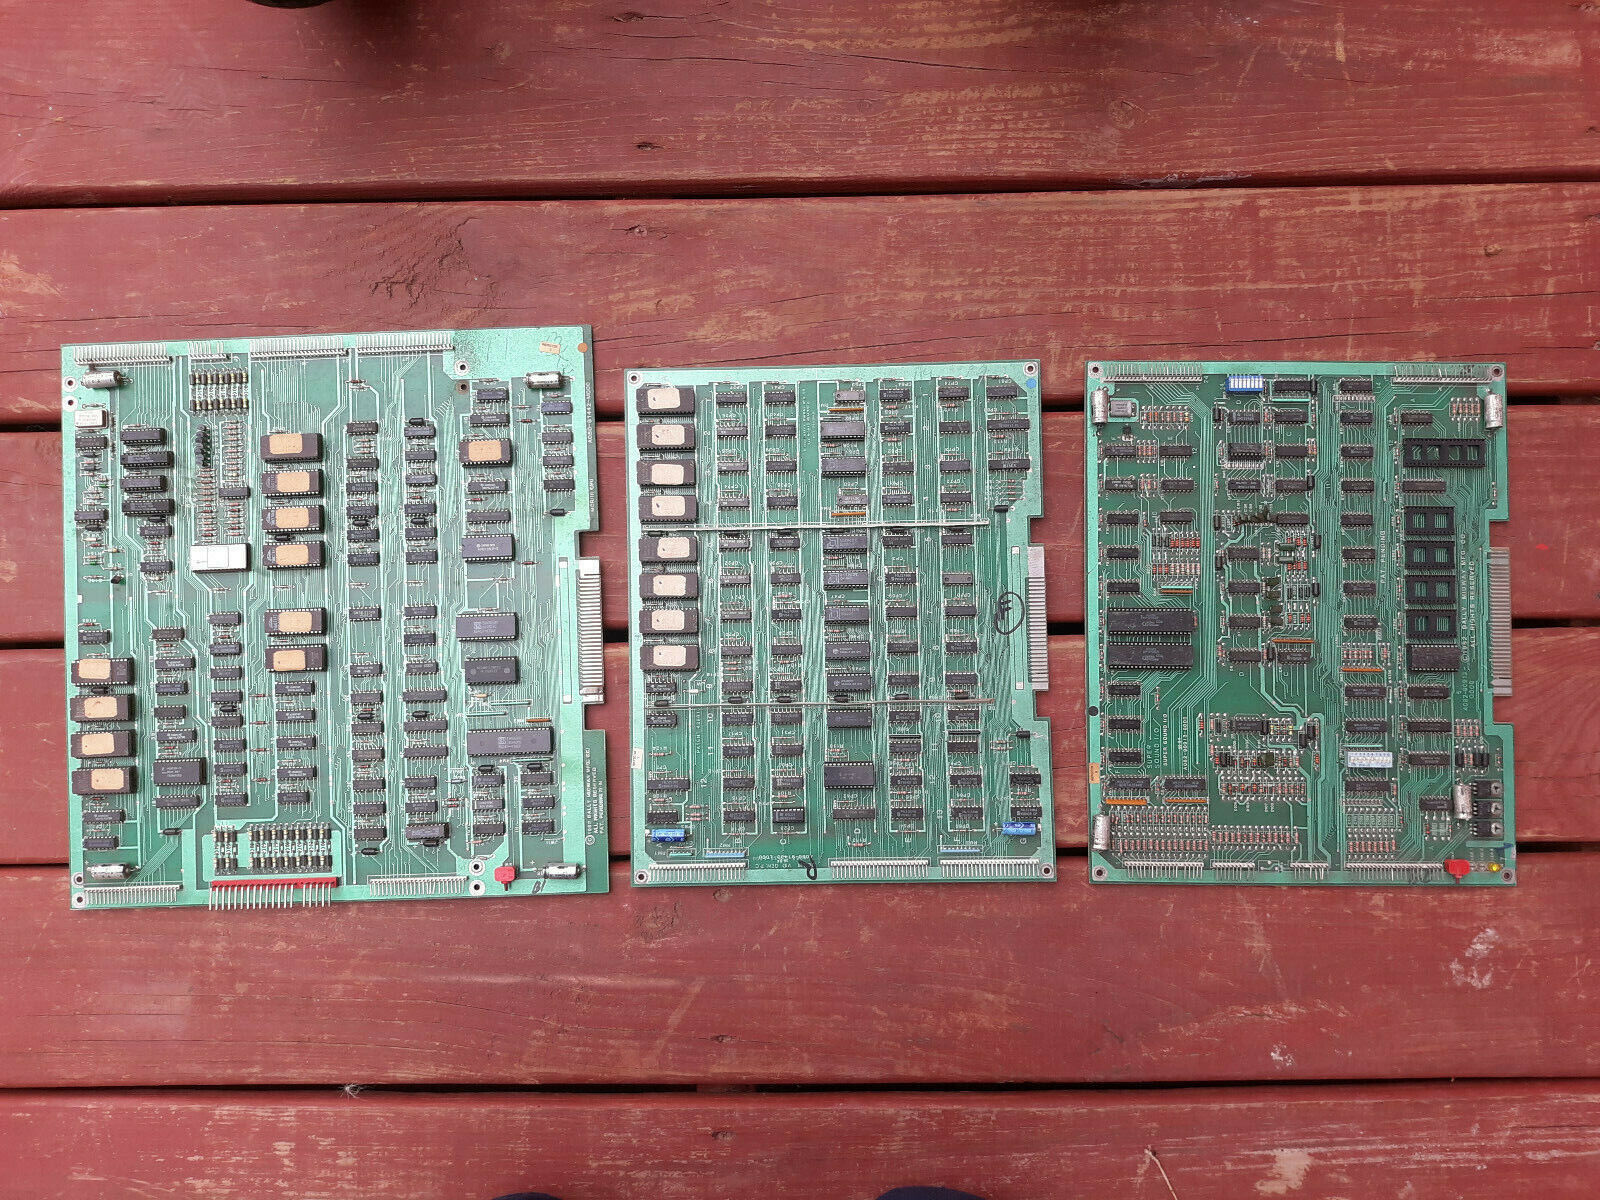 MCR III 3 Midway ARCADE Video Game PCB board set DISCS of TRON? SPY HUNTER?